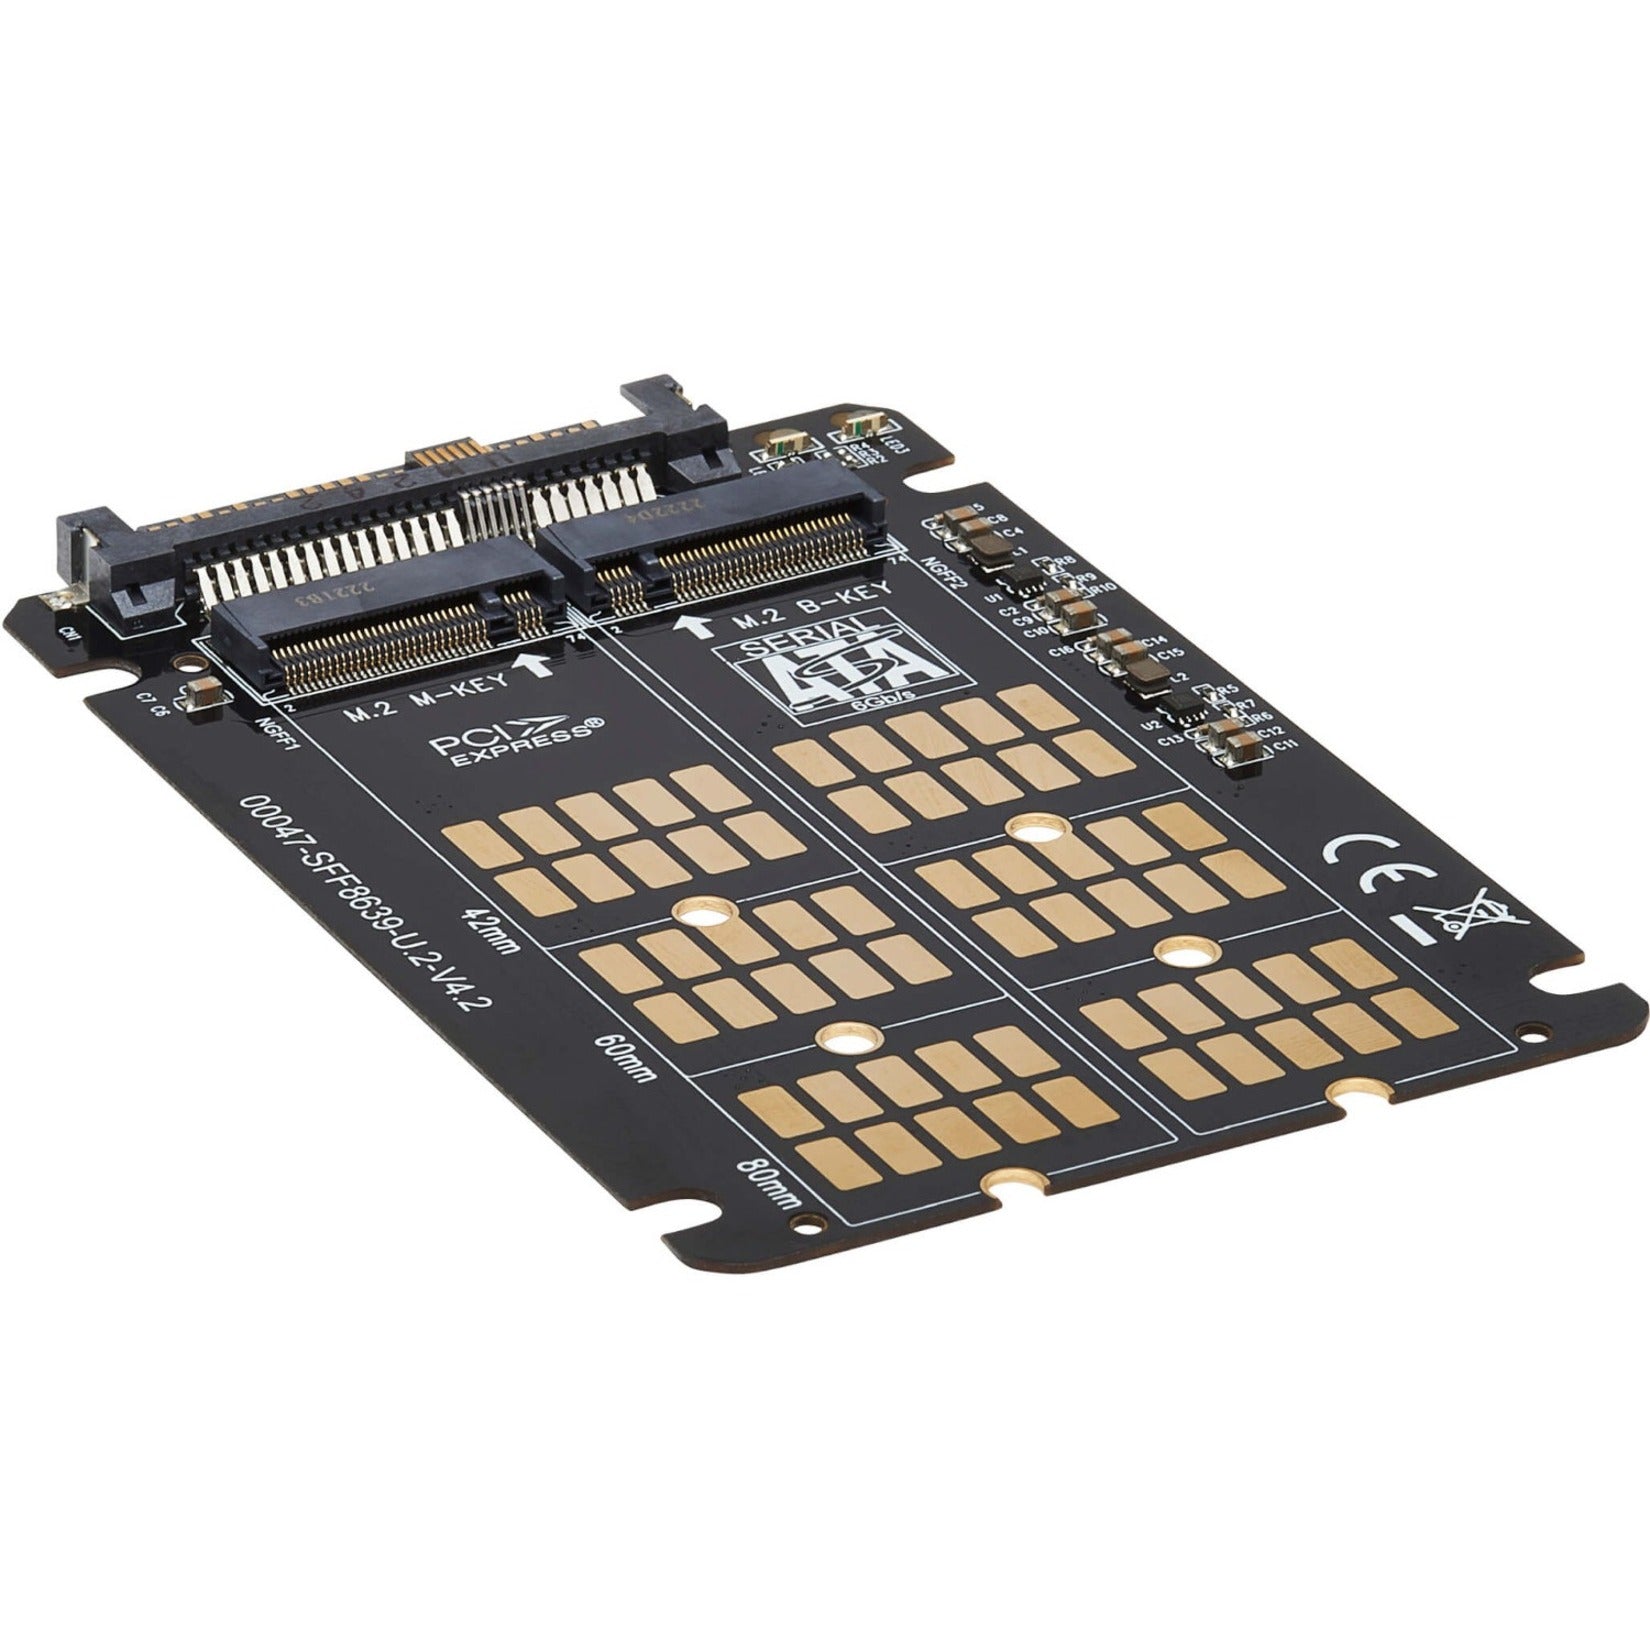 Tripp Lite P970-U2M2 U.2 to M.2 Adapter for PCIe NVMe SSD, SFF-8639